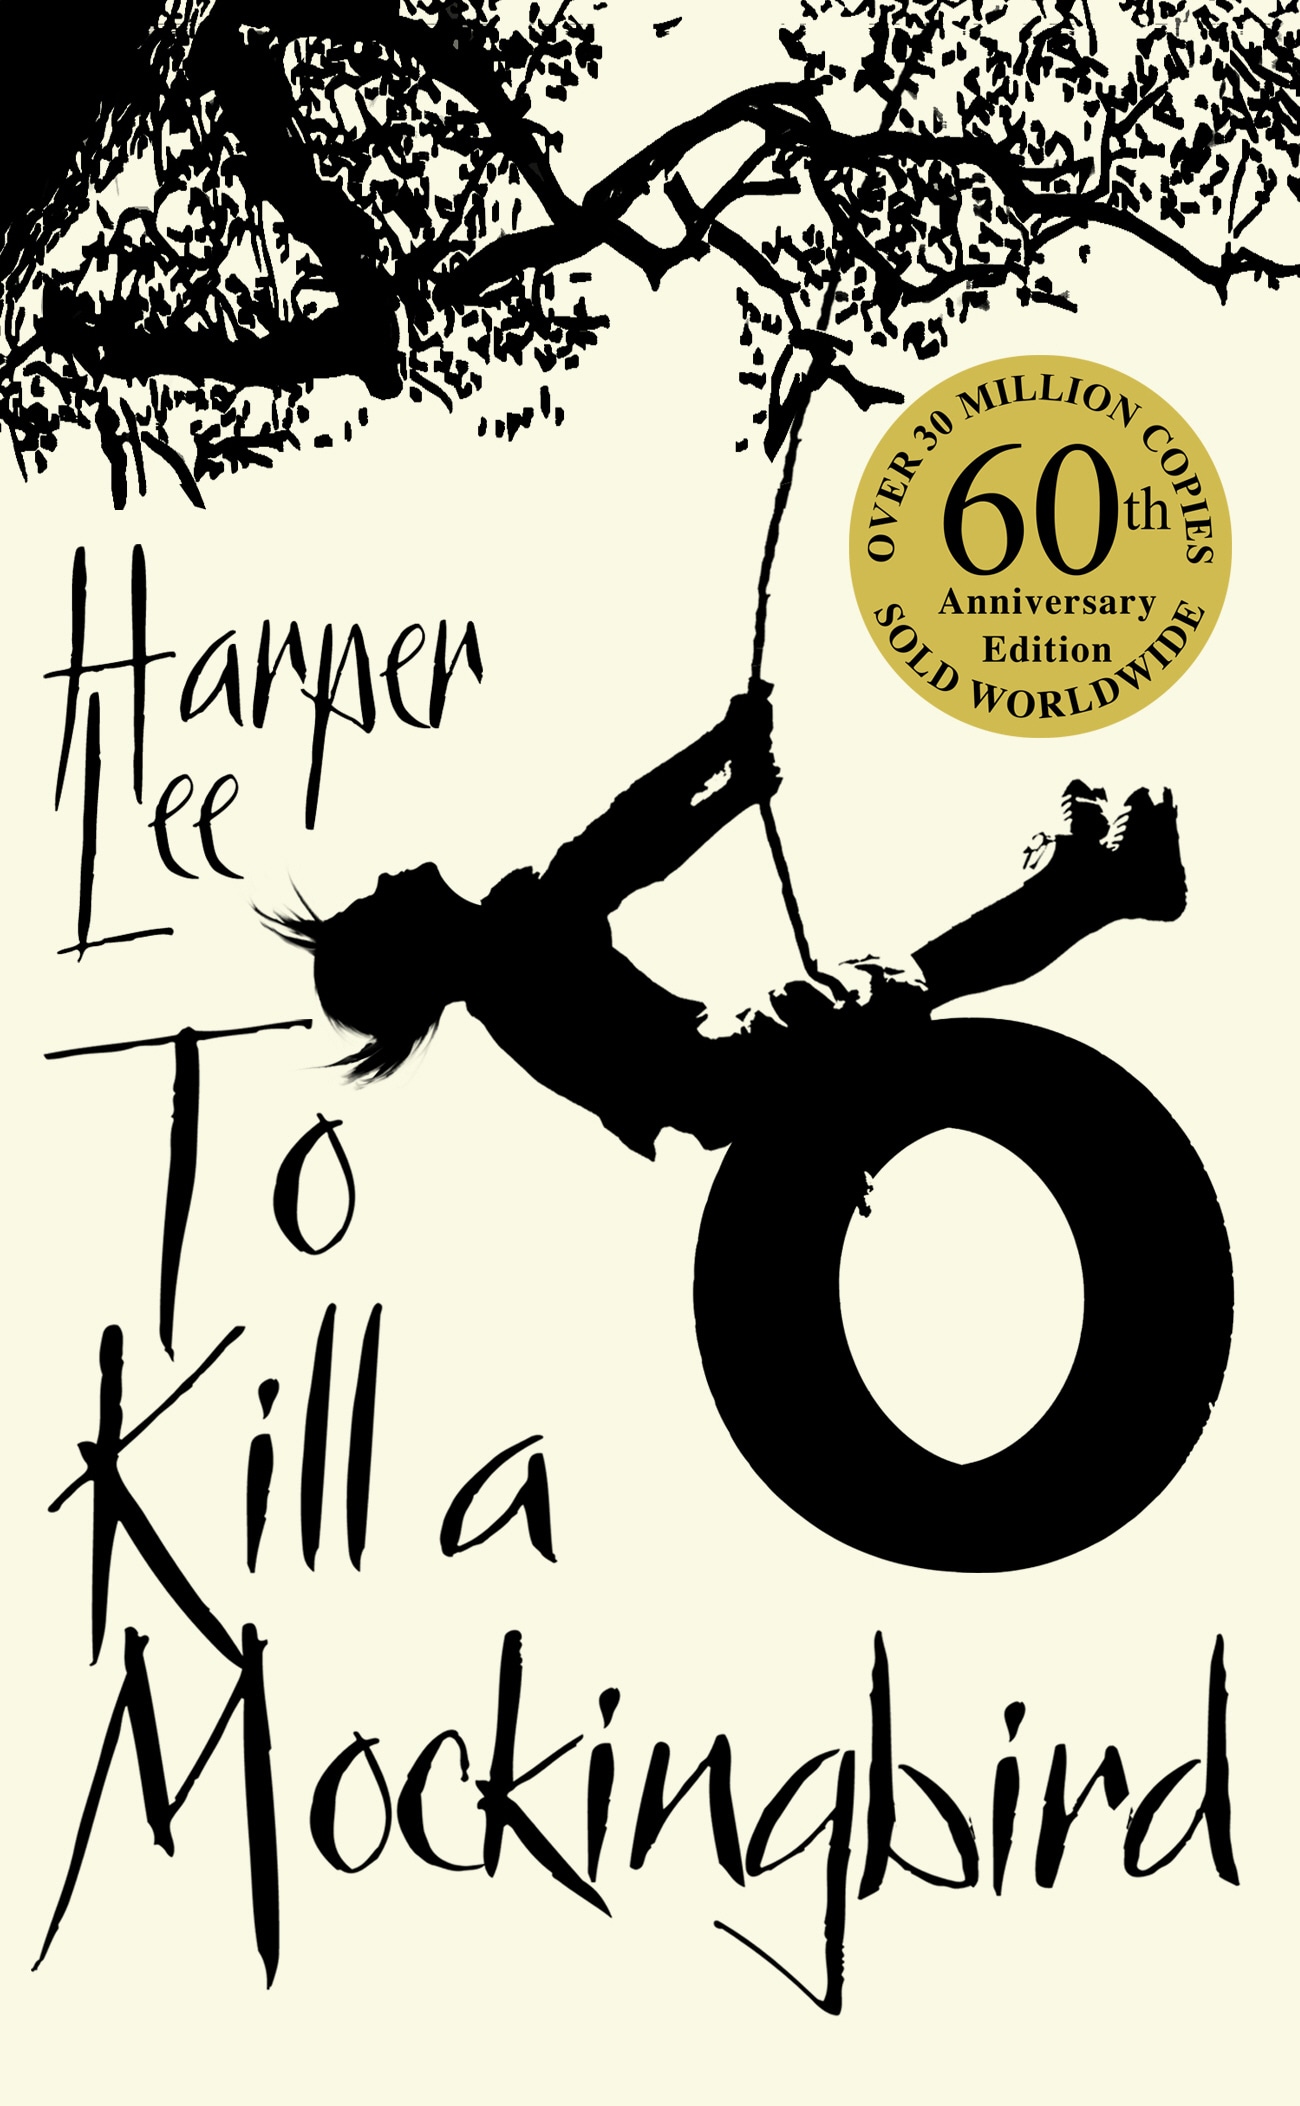 Book “To Kill A Mockingbird” by Harper Lee — June 24, 2010